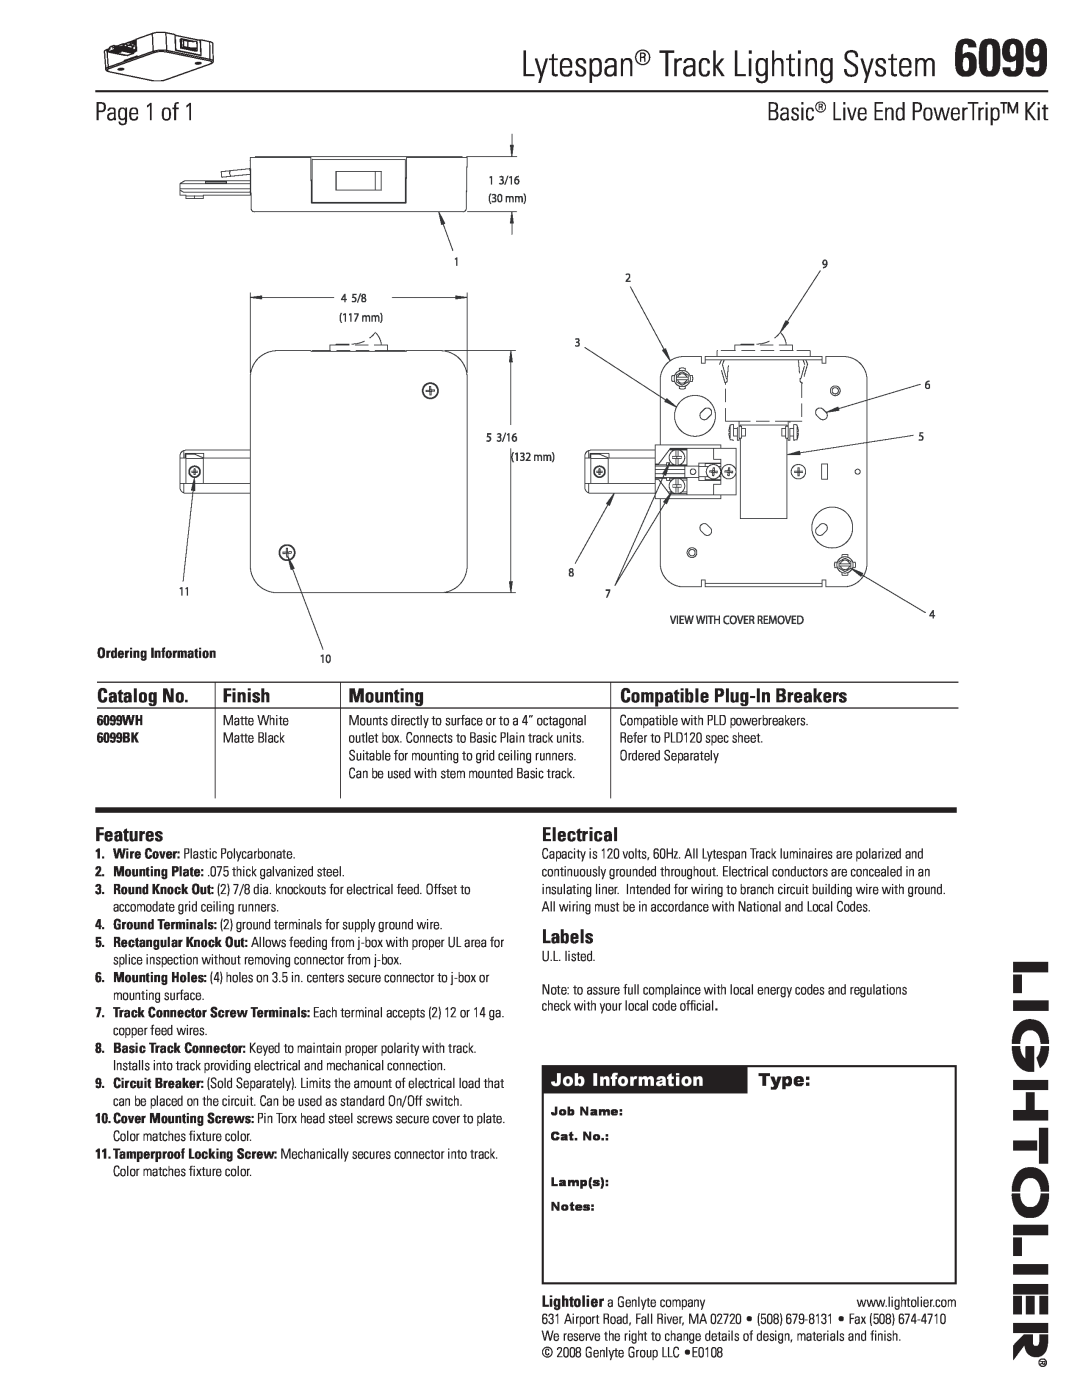 Lightolier 6099 manual Lytespan Track Lighting System, Page 1 of, Basic Live End PowerTrip Kit, Catalog No, Finish, Labels 